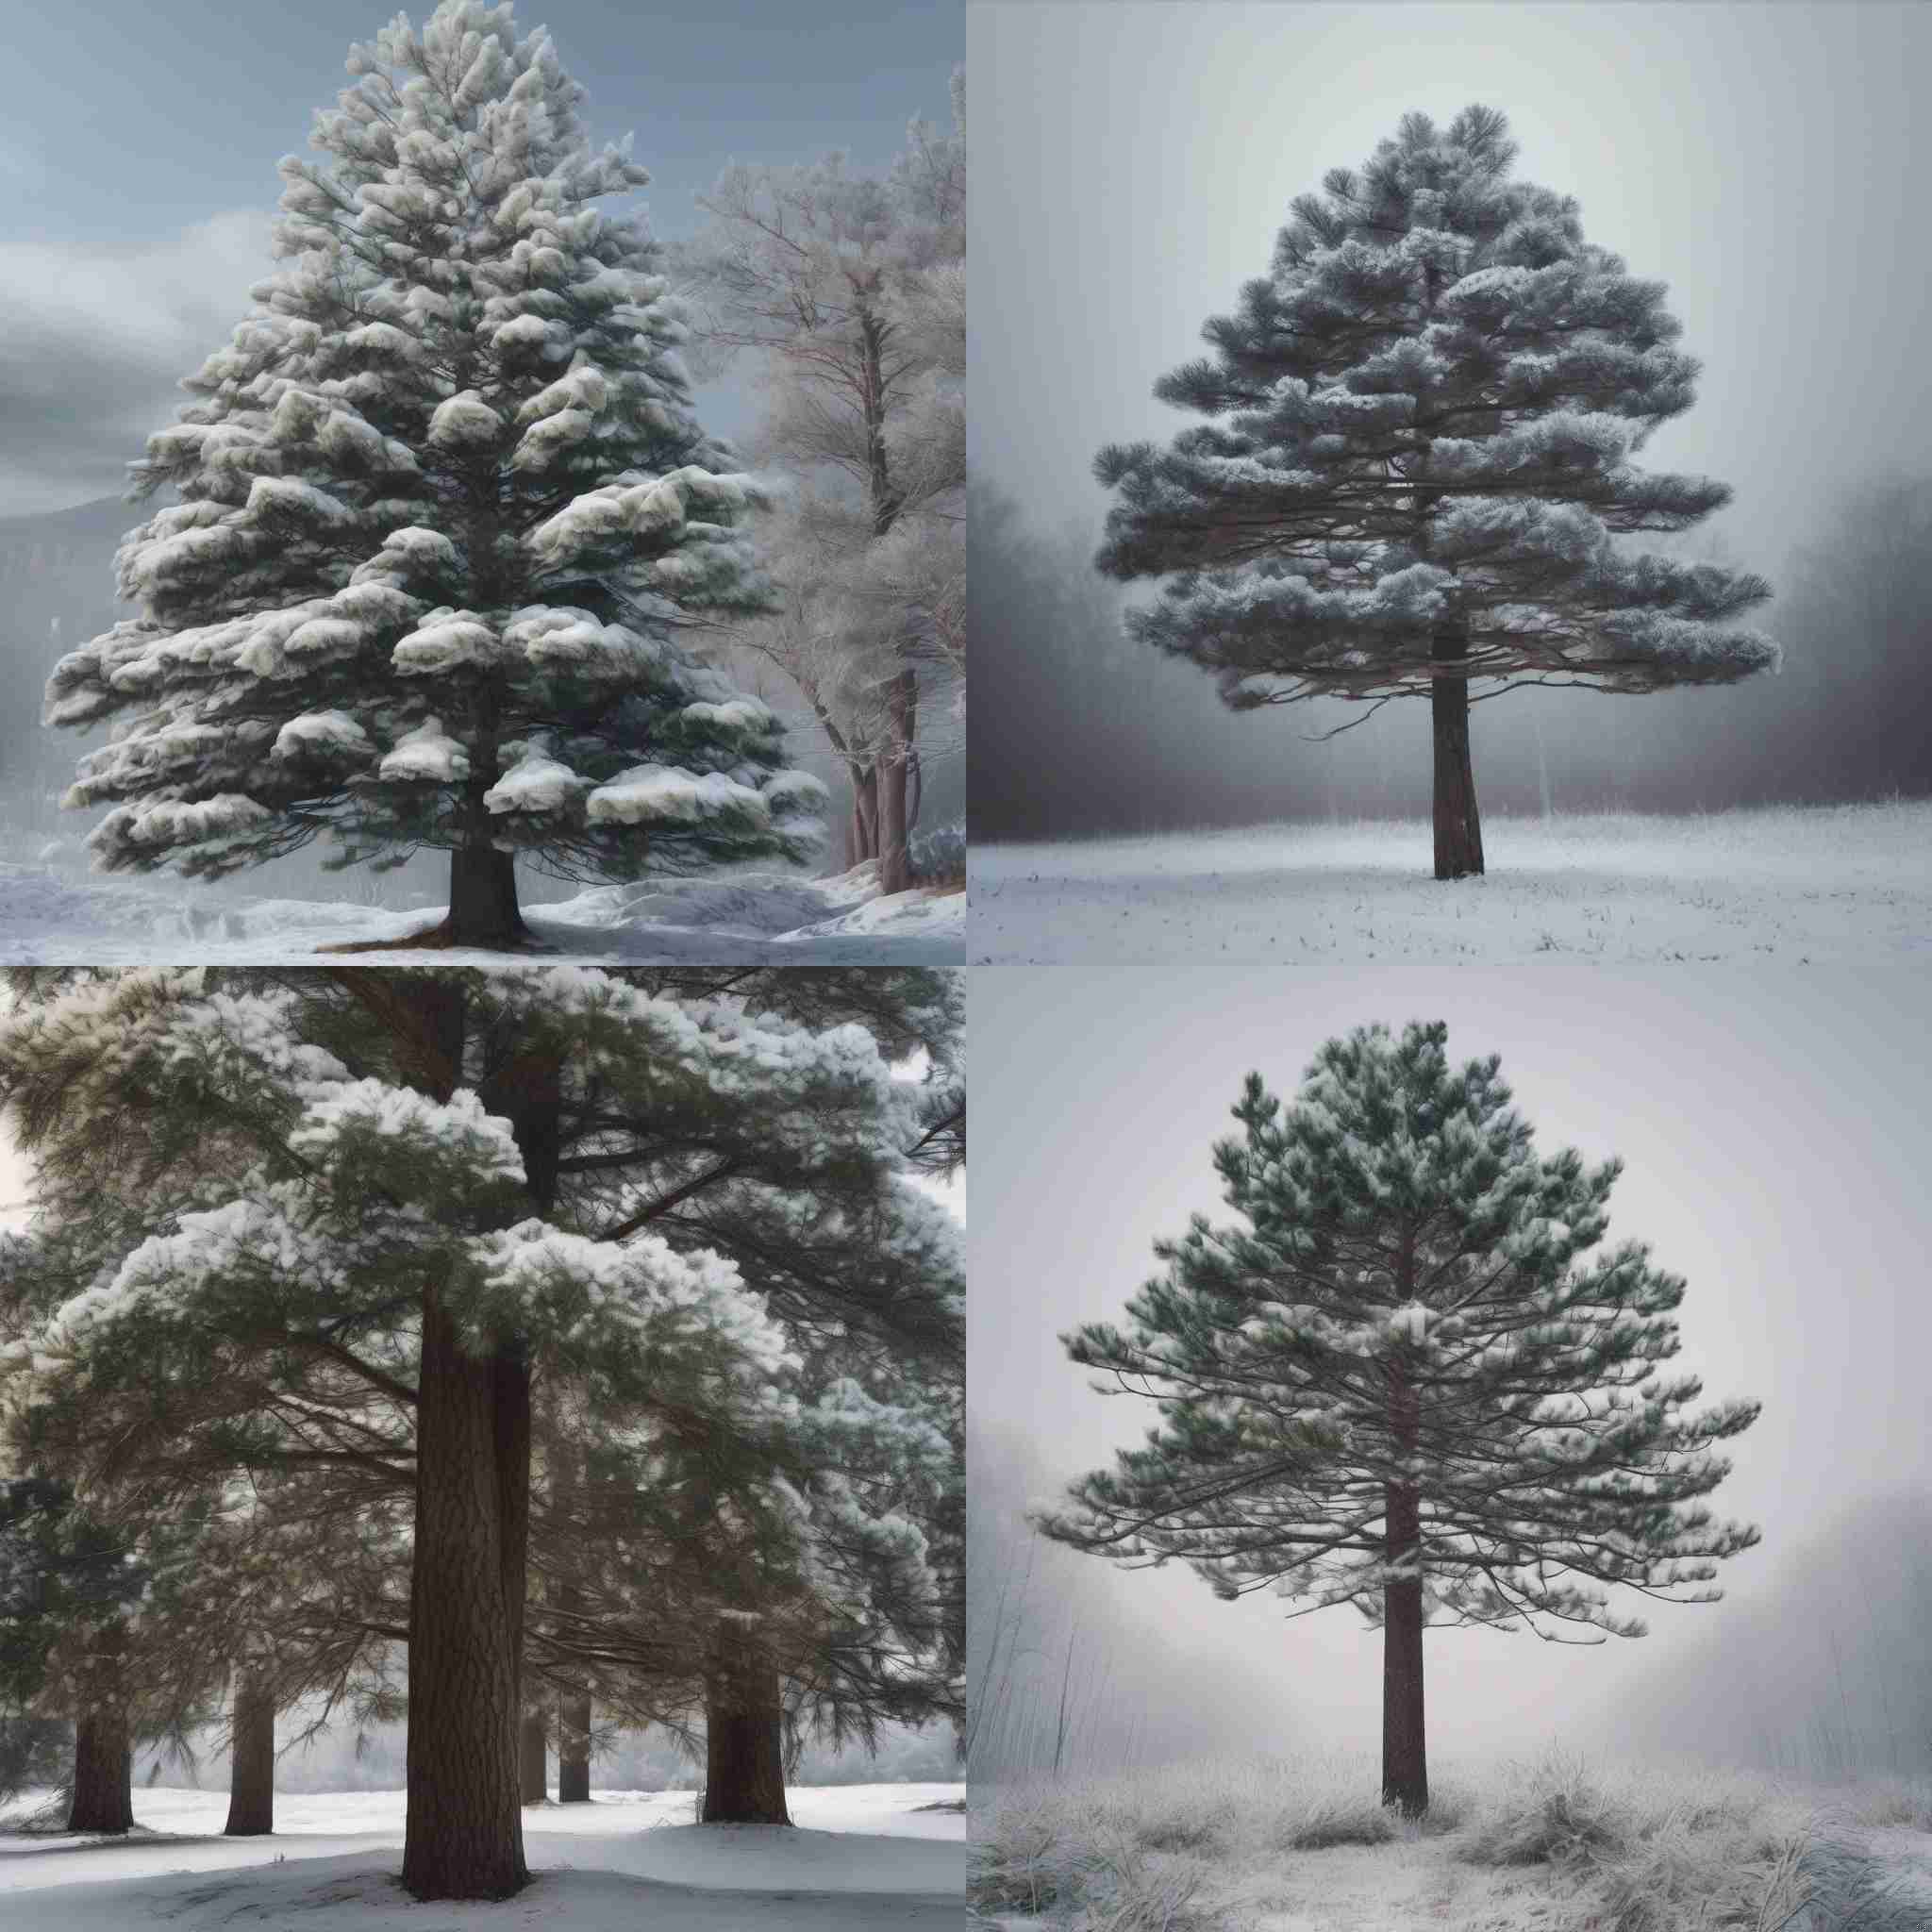 A pine tree in winter